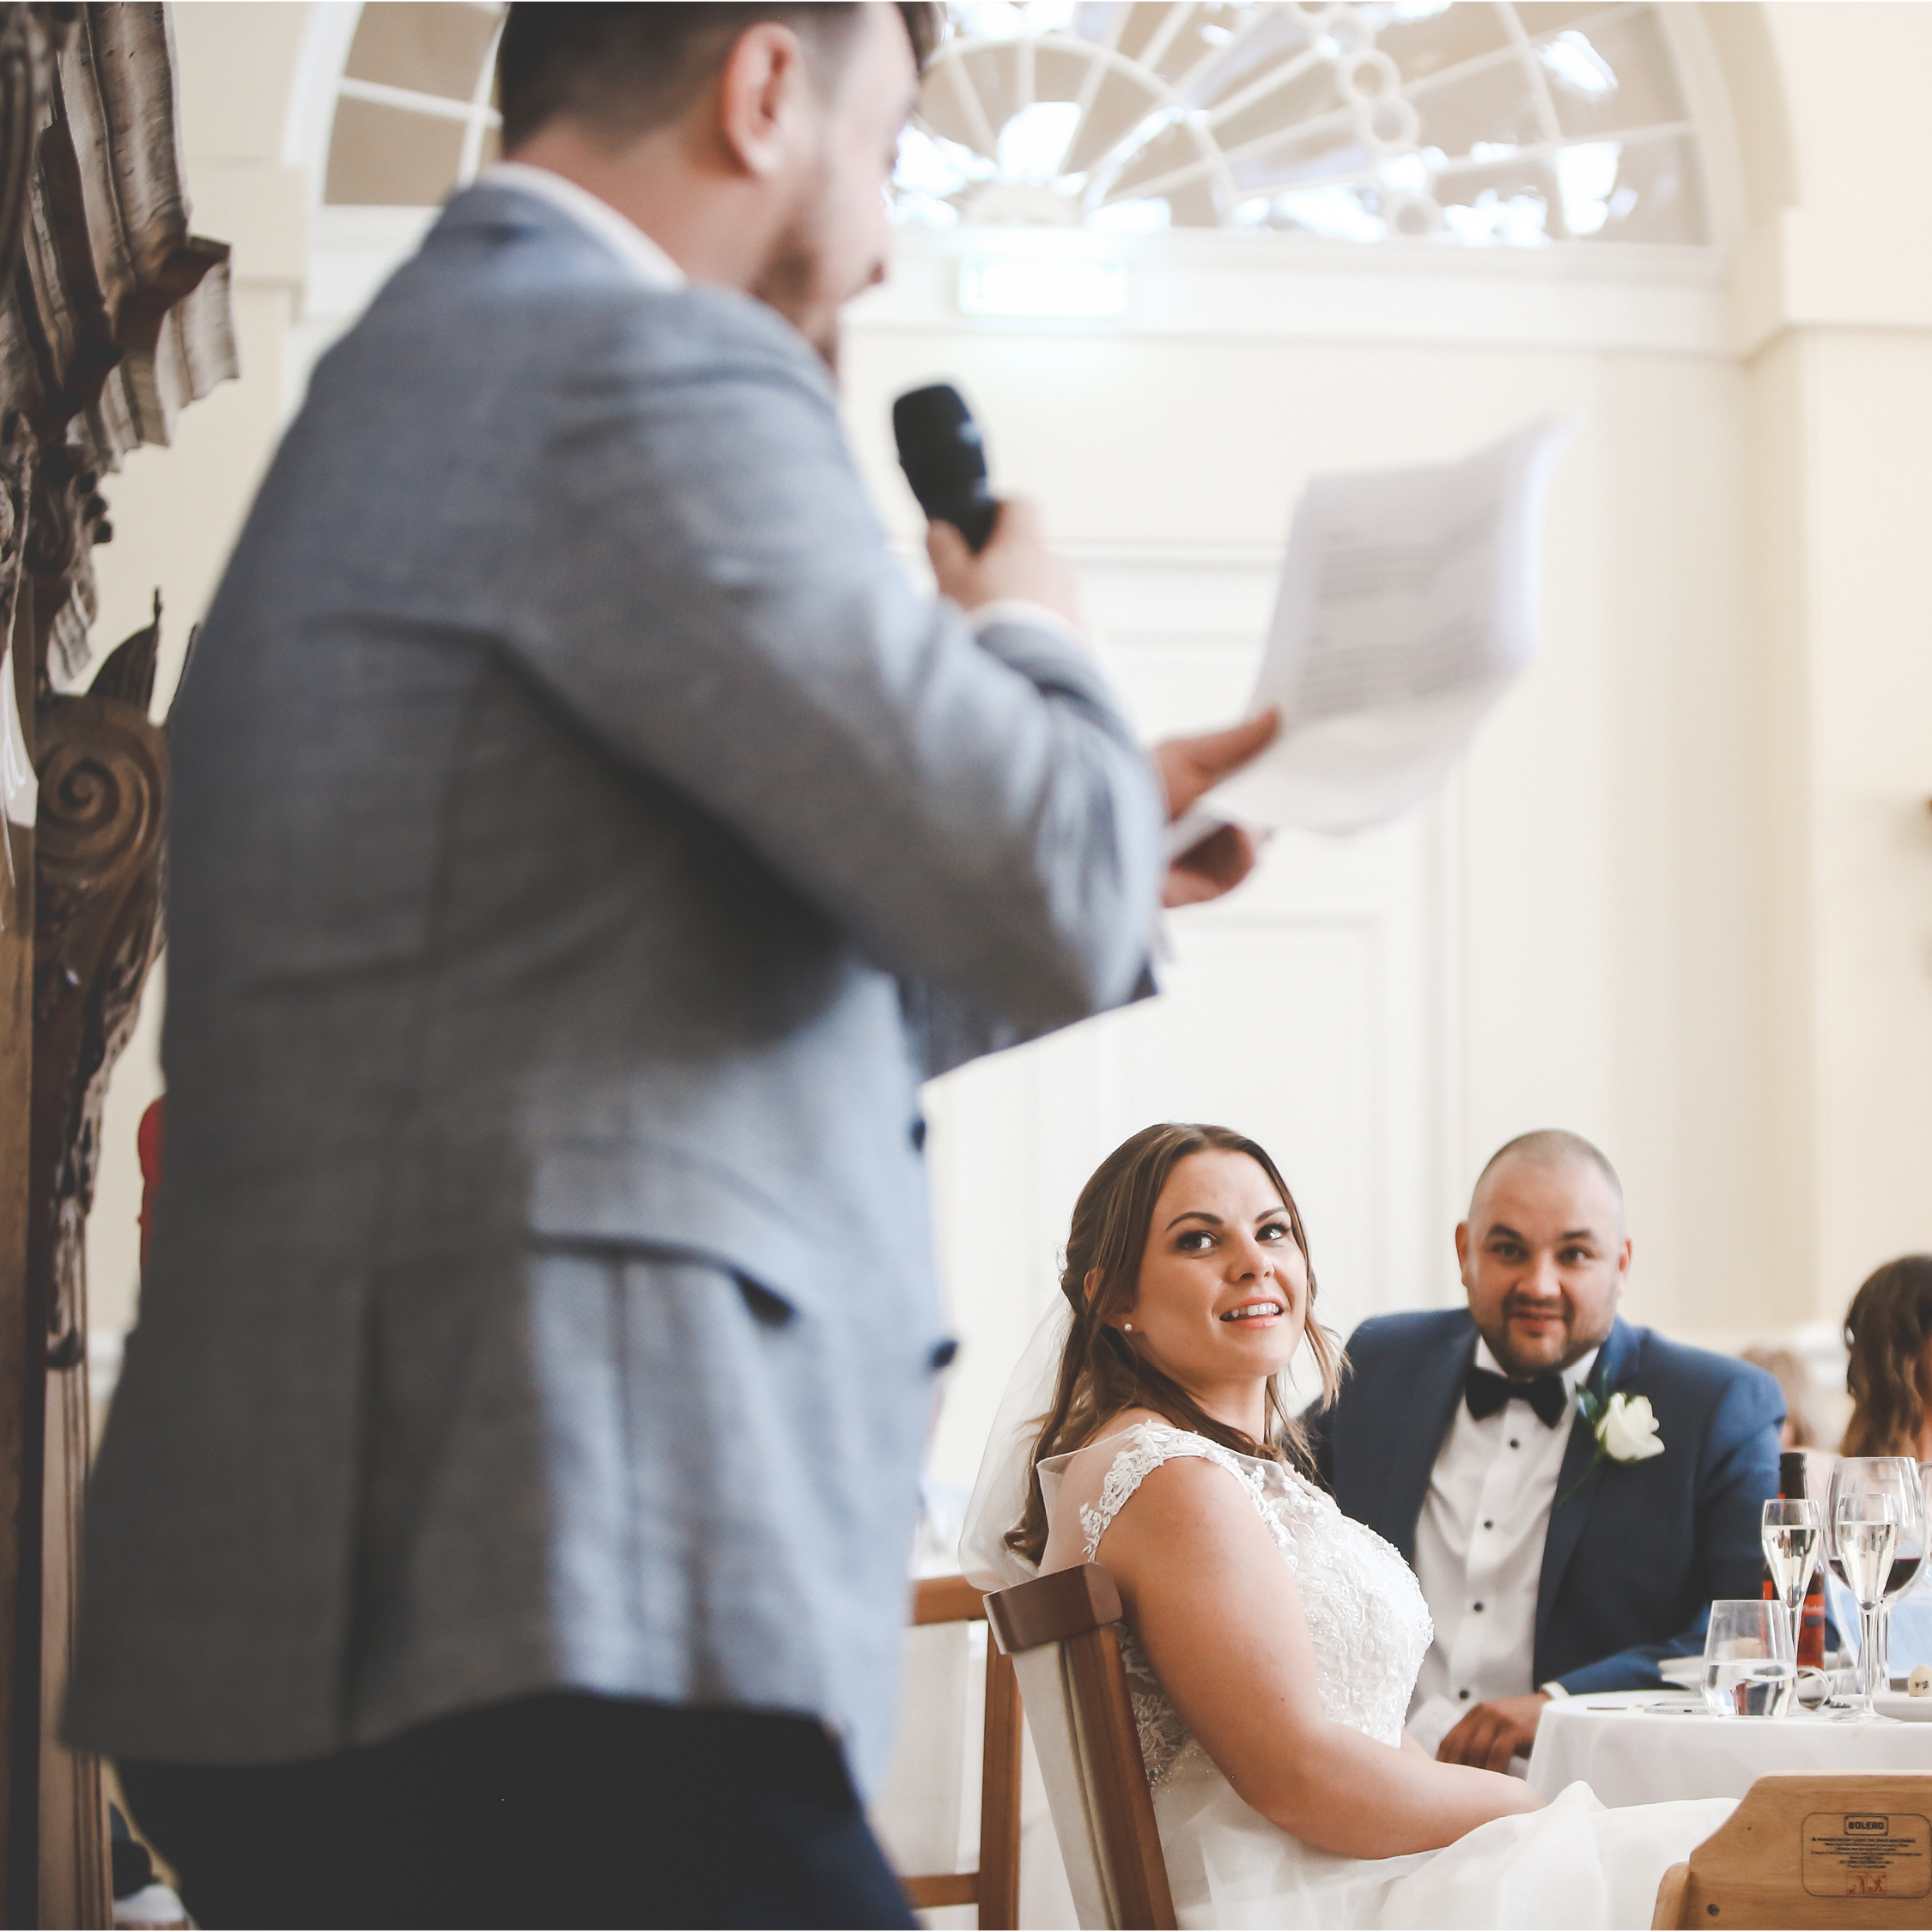 Unique wedding speech guide make it personal